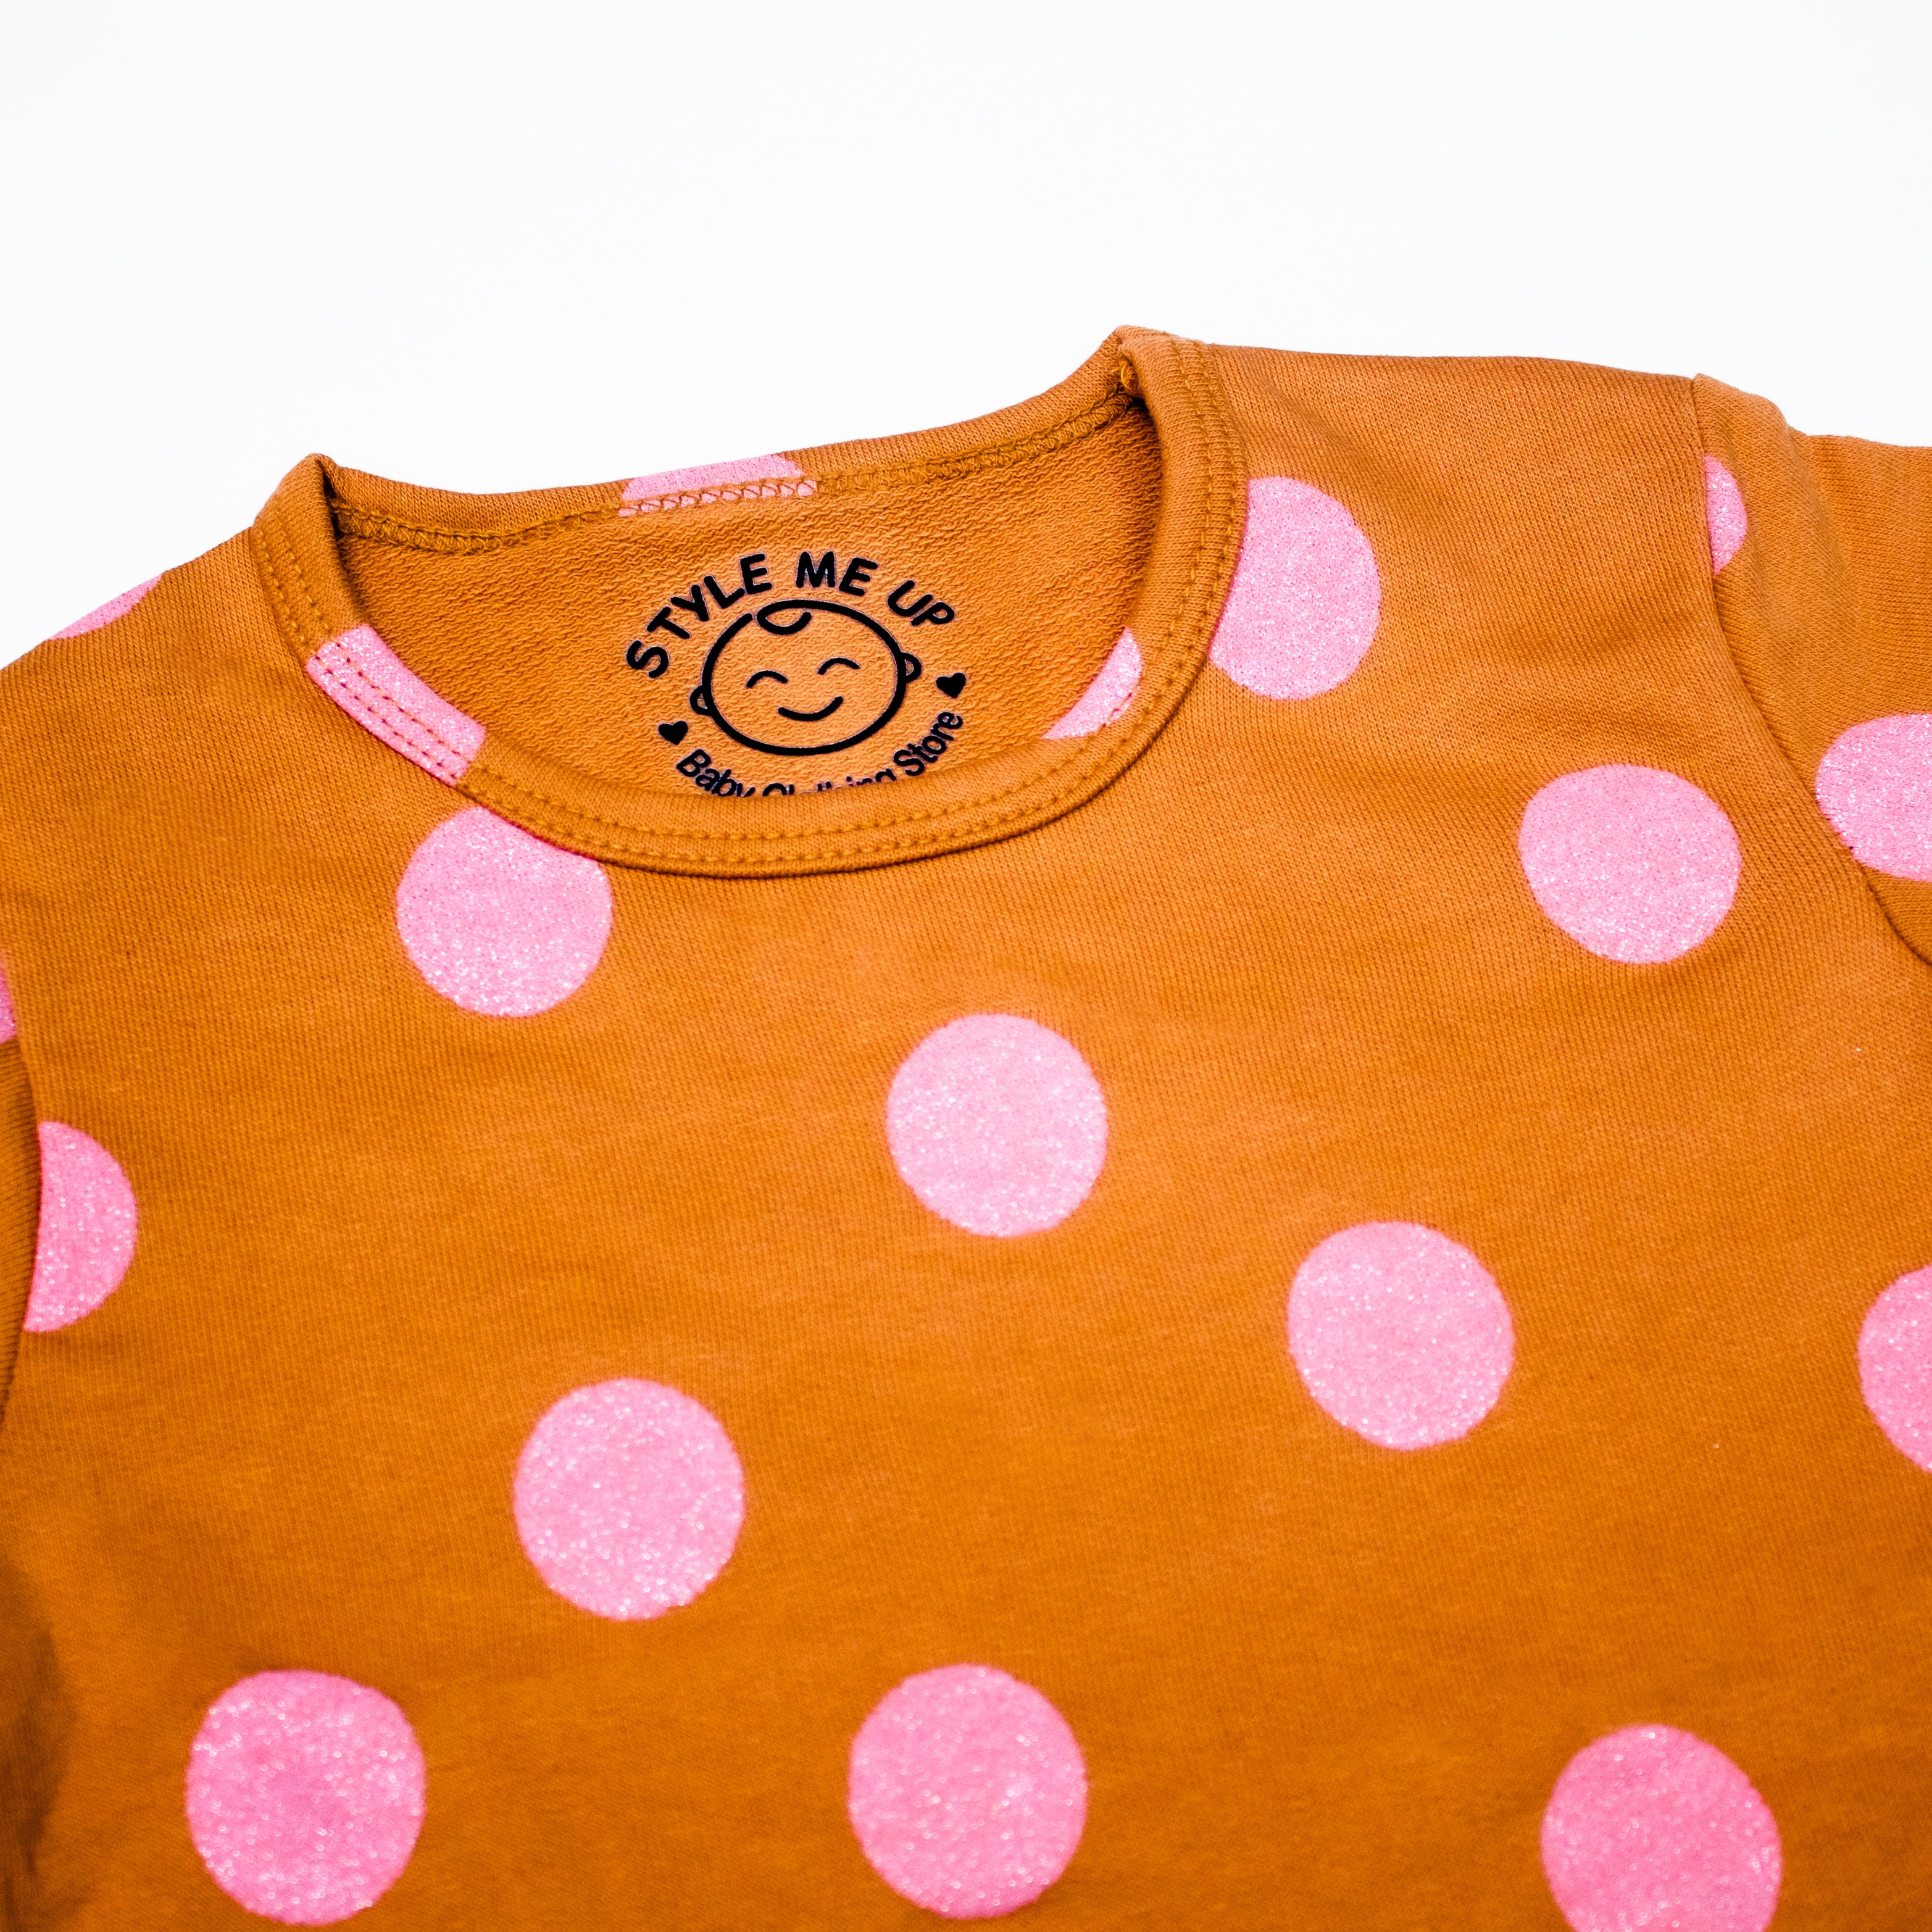 Brown Pink Polka Dots T-Shirt And Shorts For Kids